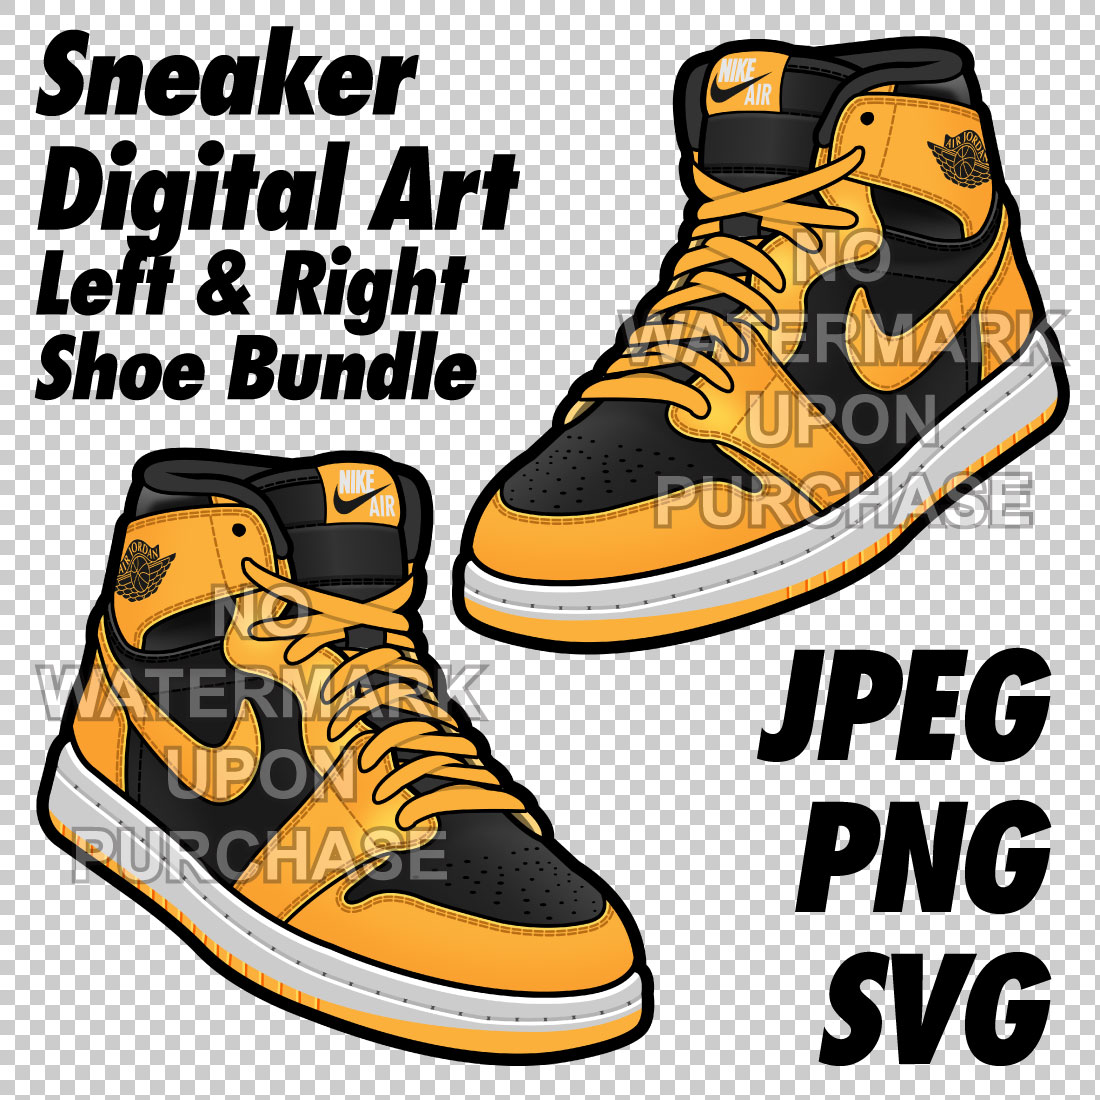 Air Jordan 1 Pollen JPEG PNG SVG right & left shoe bundle cover image.